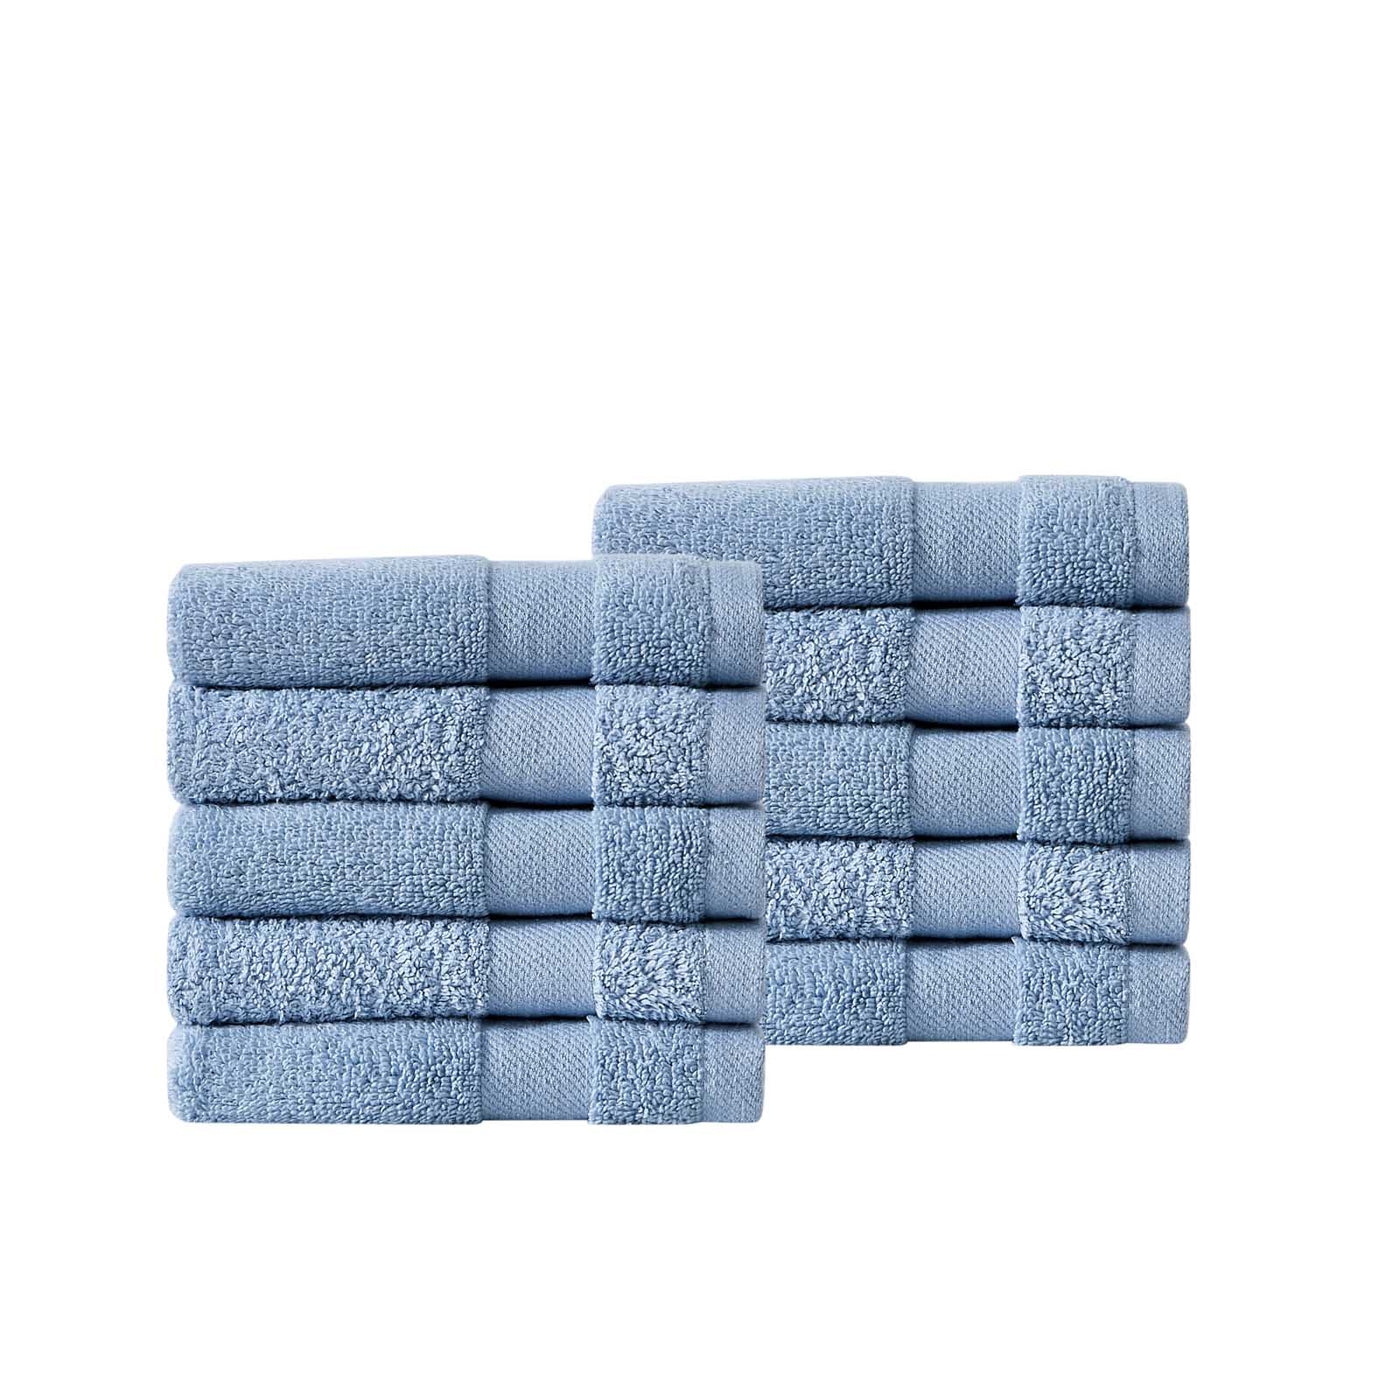 Super-Plush Hand Towel and Wash Cloth Sets